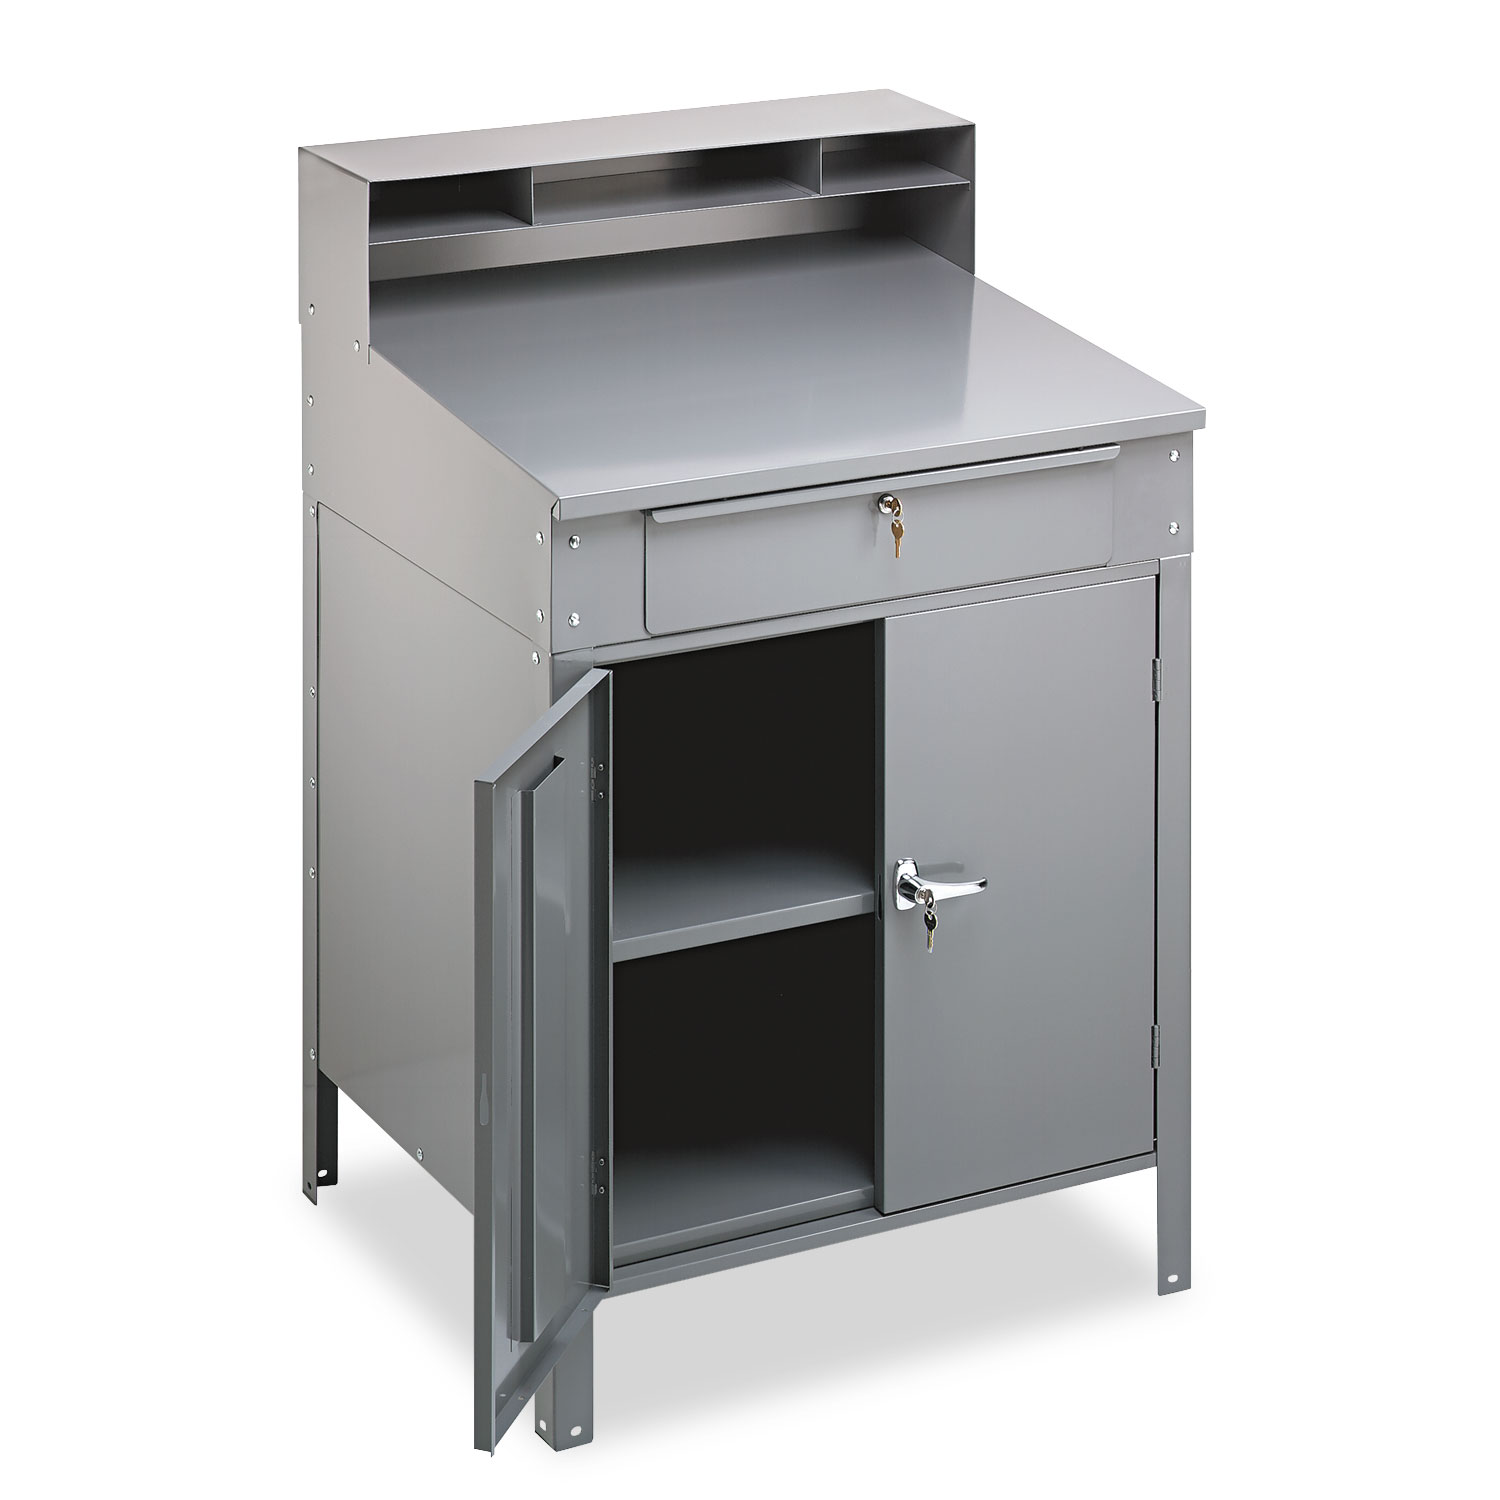  Tennsco SR-58MG Steel Cabinet Shop Desk, 36w x 30d x 53.75h, Medium Gray (TNNSR58MG) 